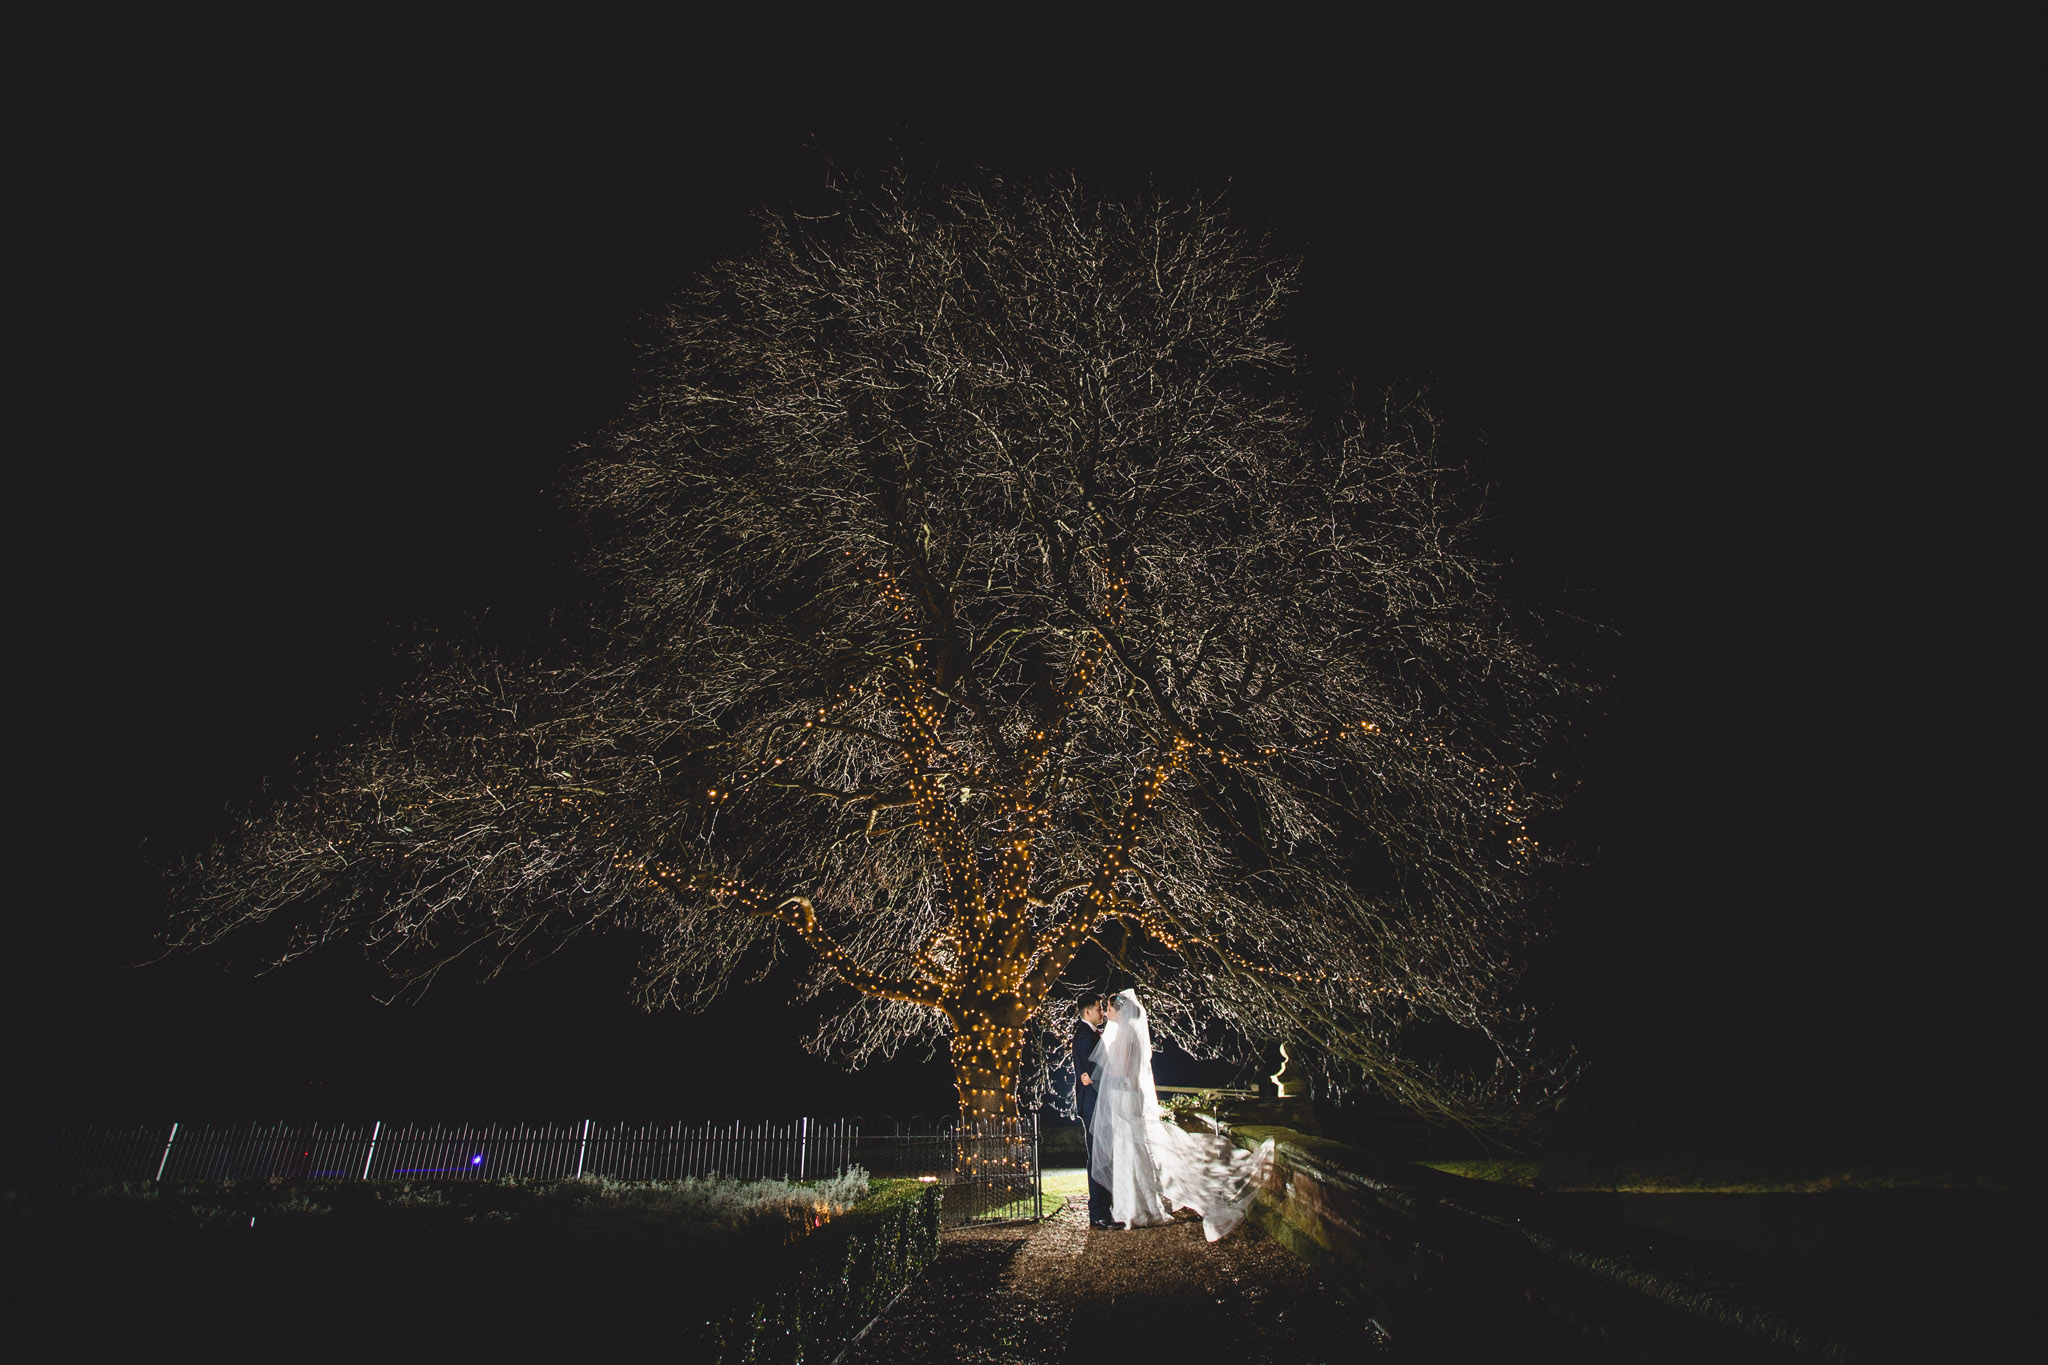 iscoyd park winter wedding pics at night lit up